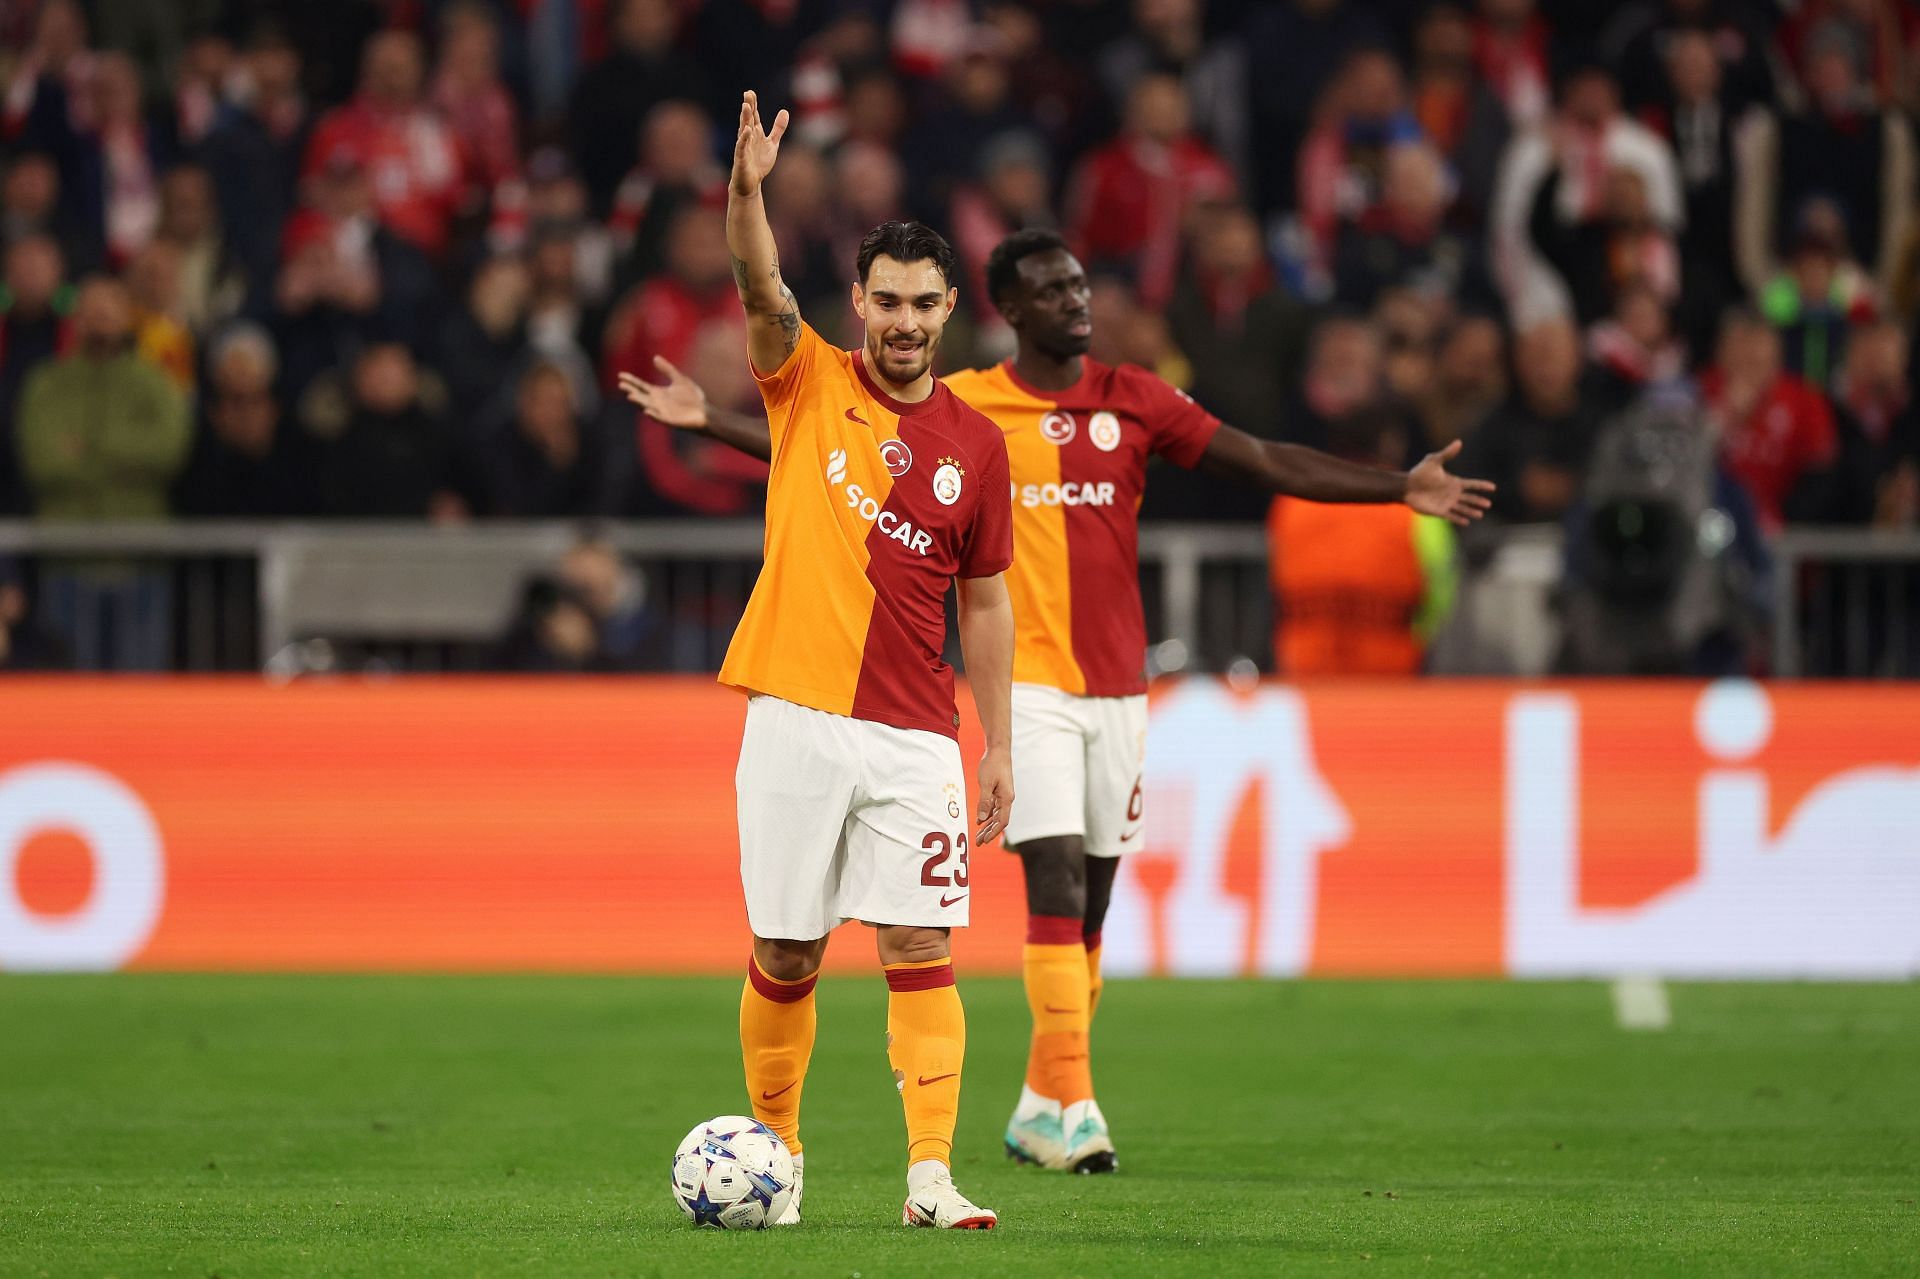 Galatasaray host Pendik on Sunday 